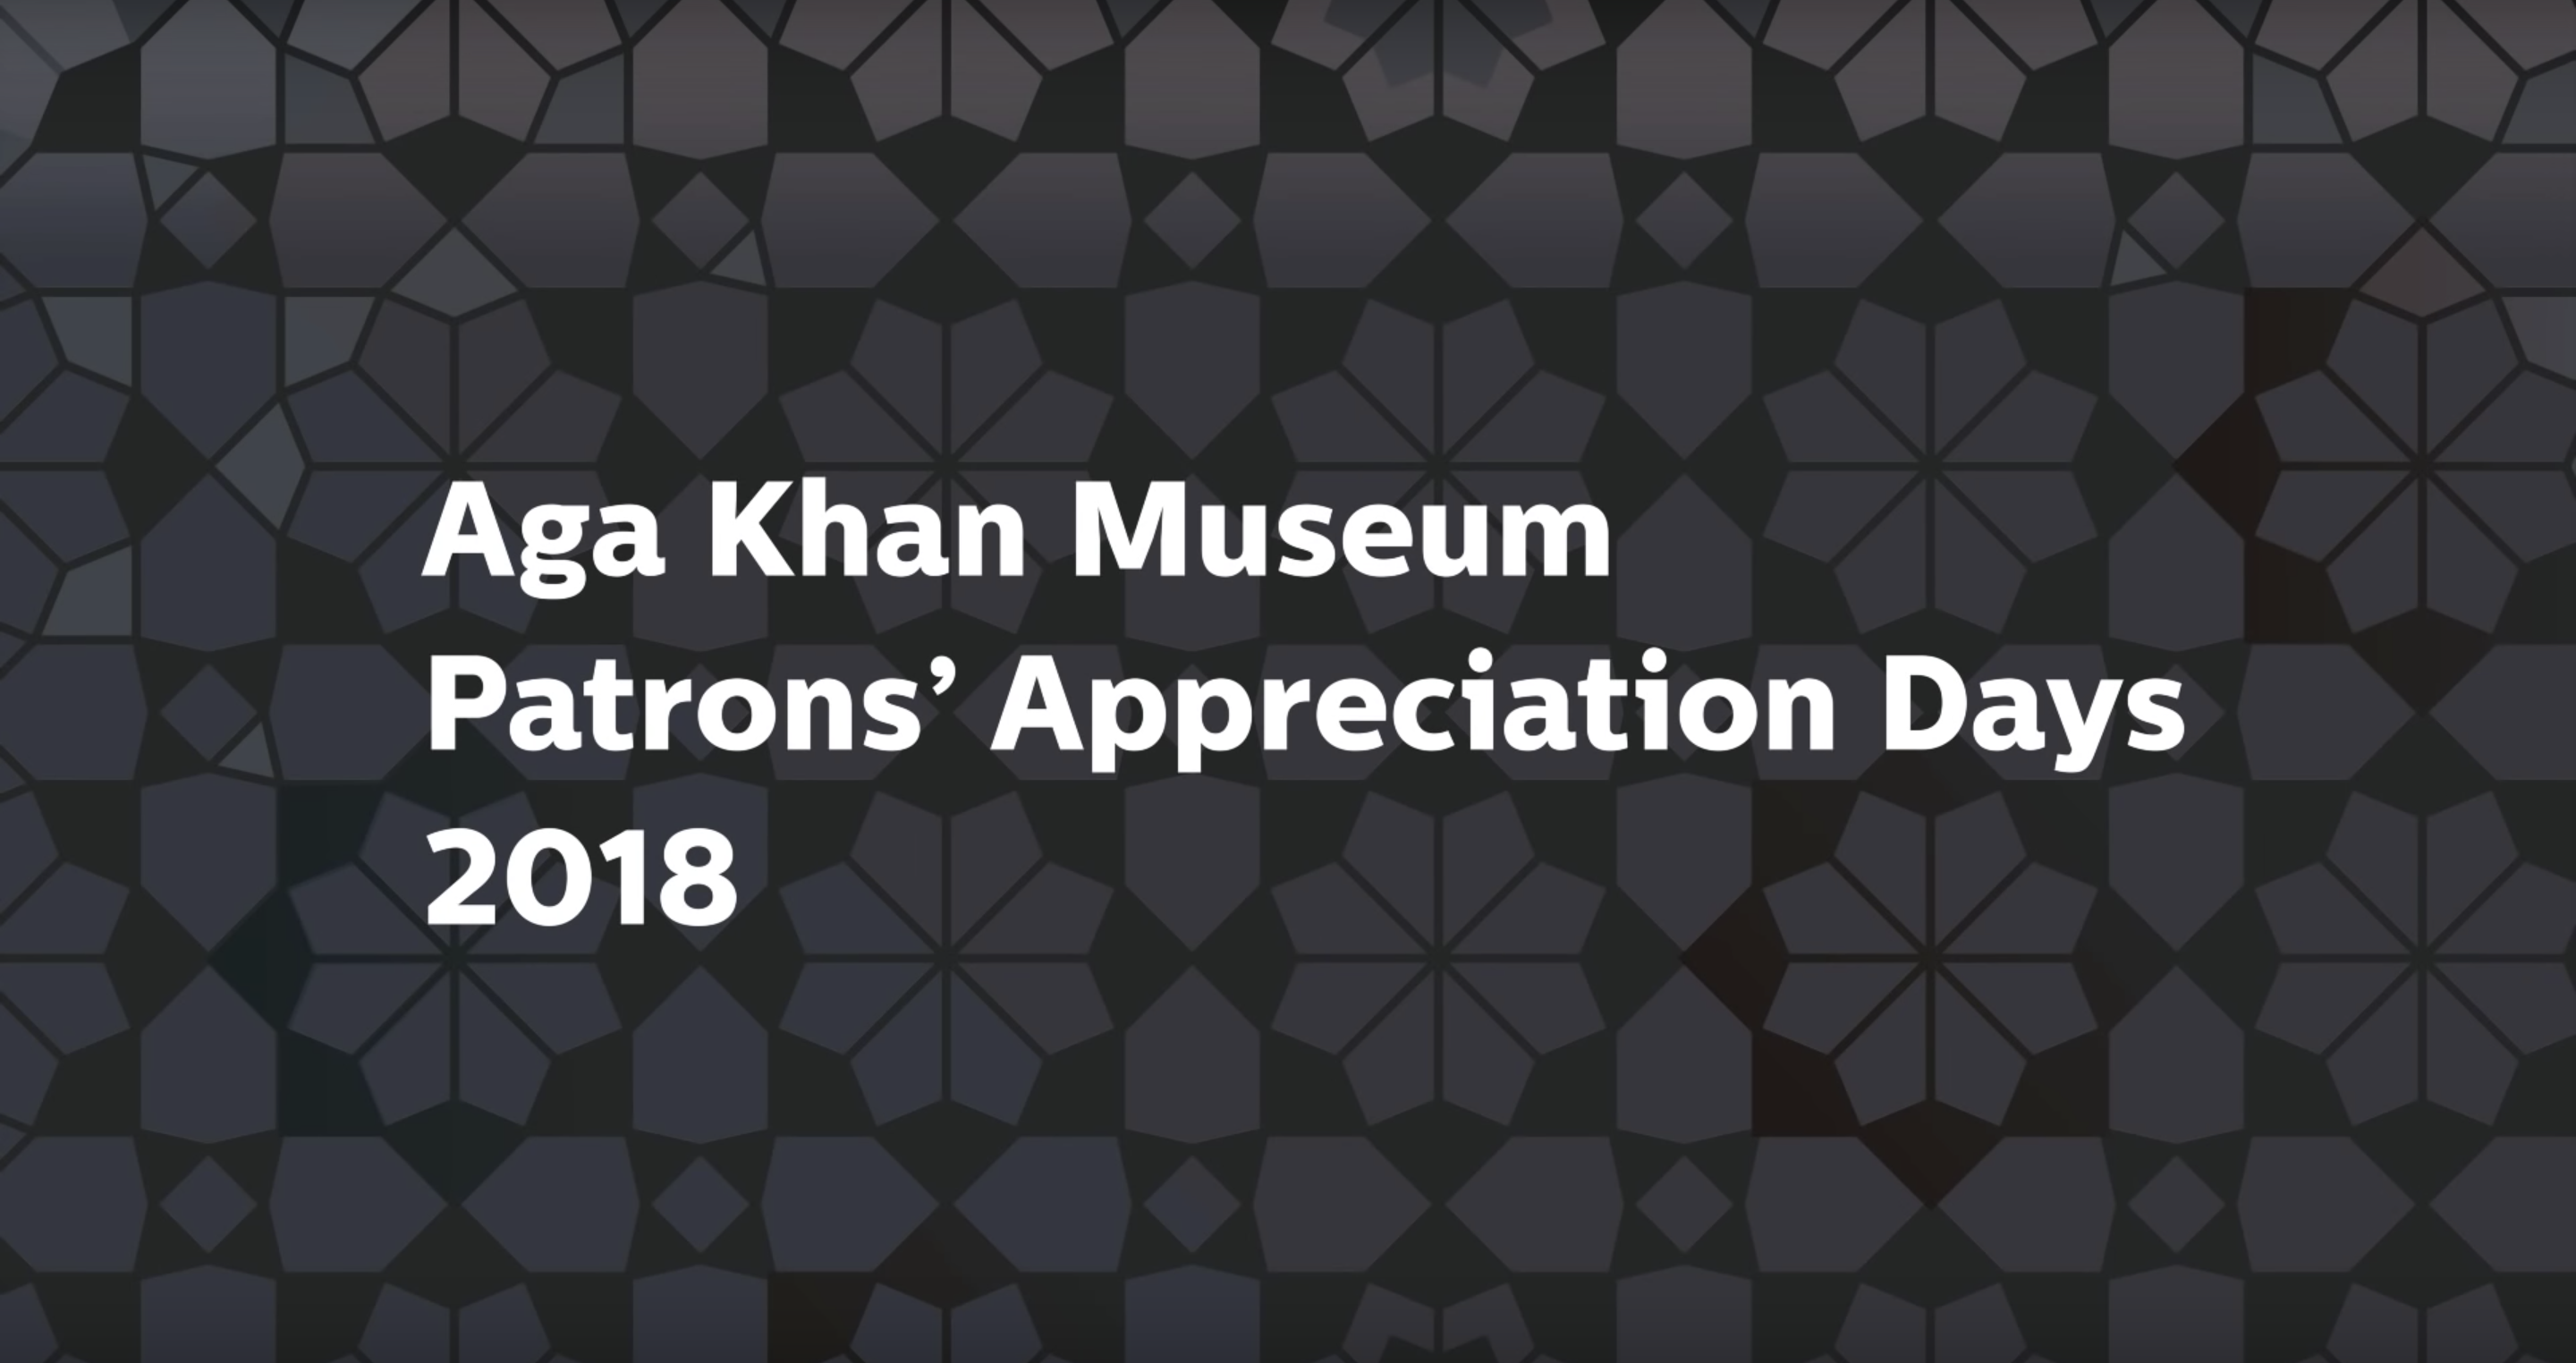 Aga Khan Museum Patrons’ Appreciation Days 2018